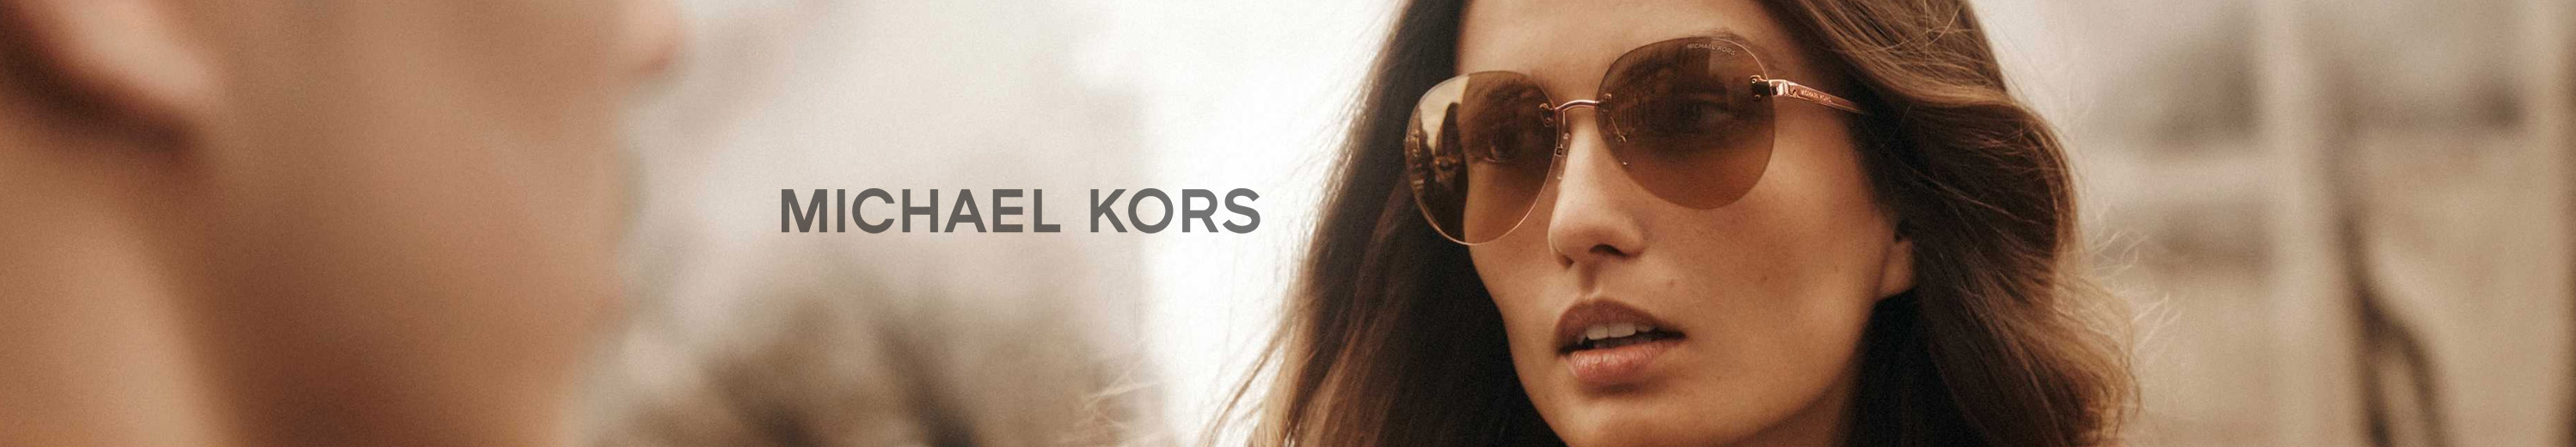 Michael Kors Glasses and Eyewear